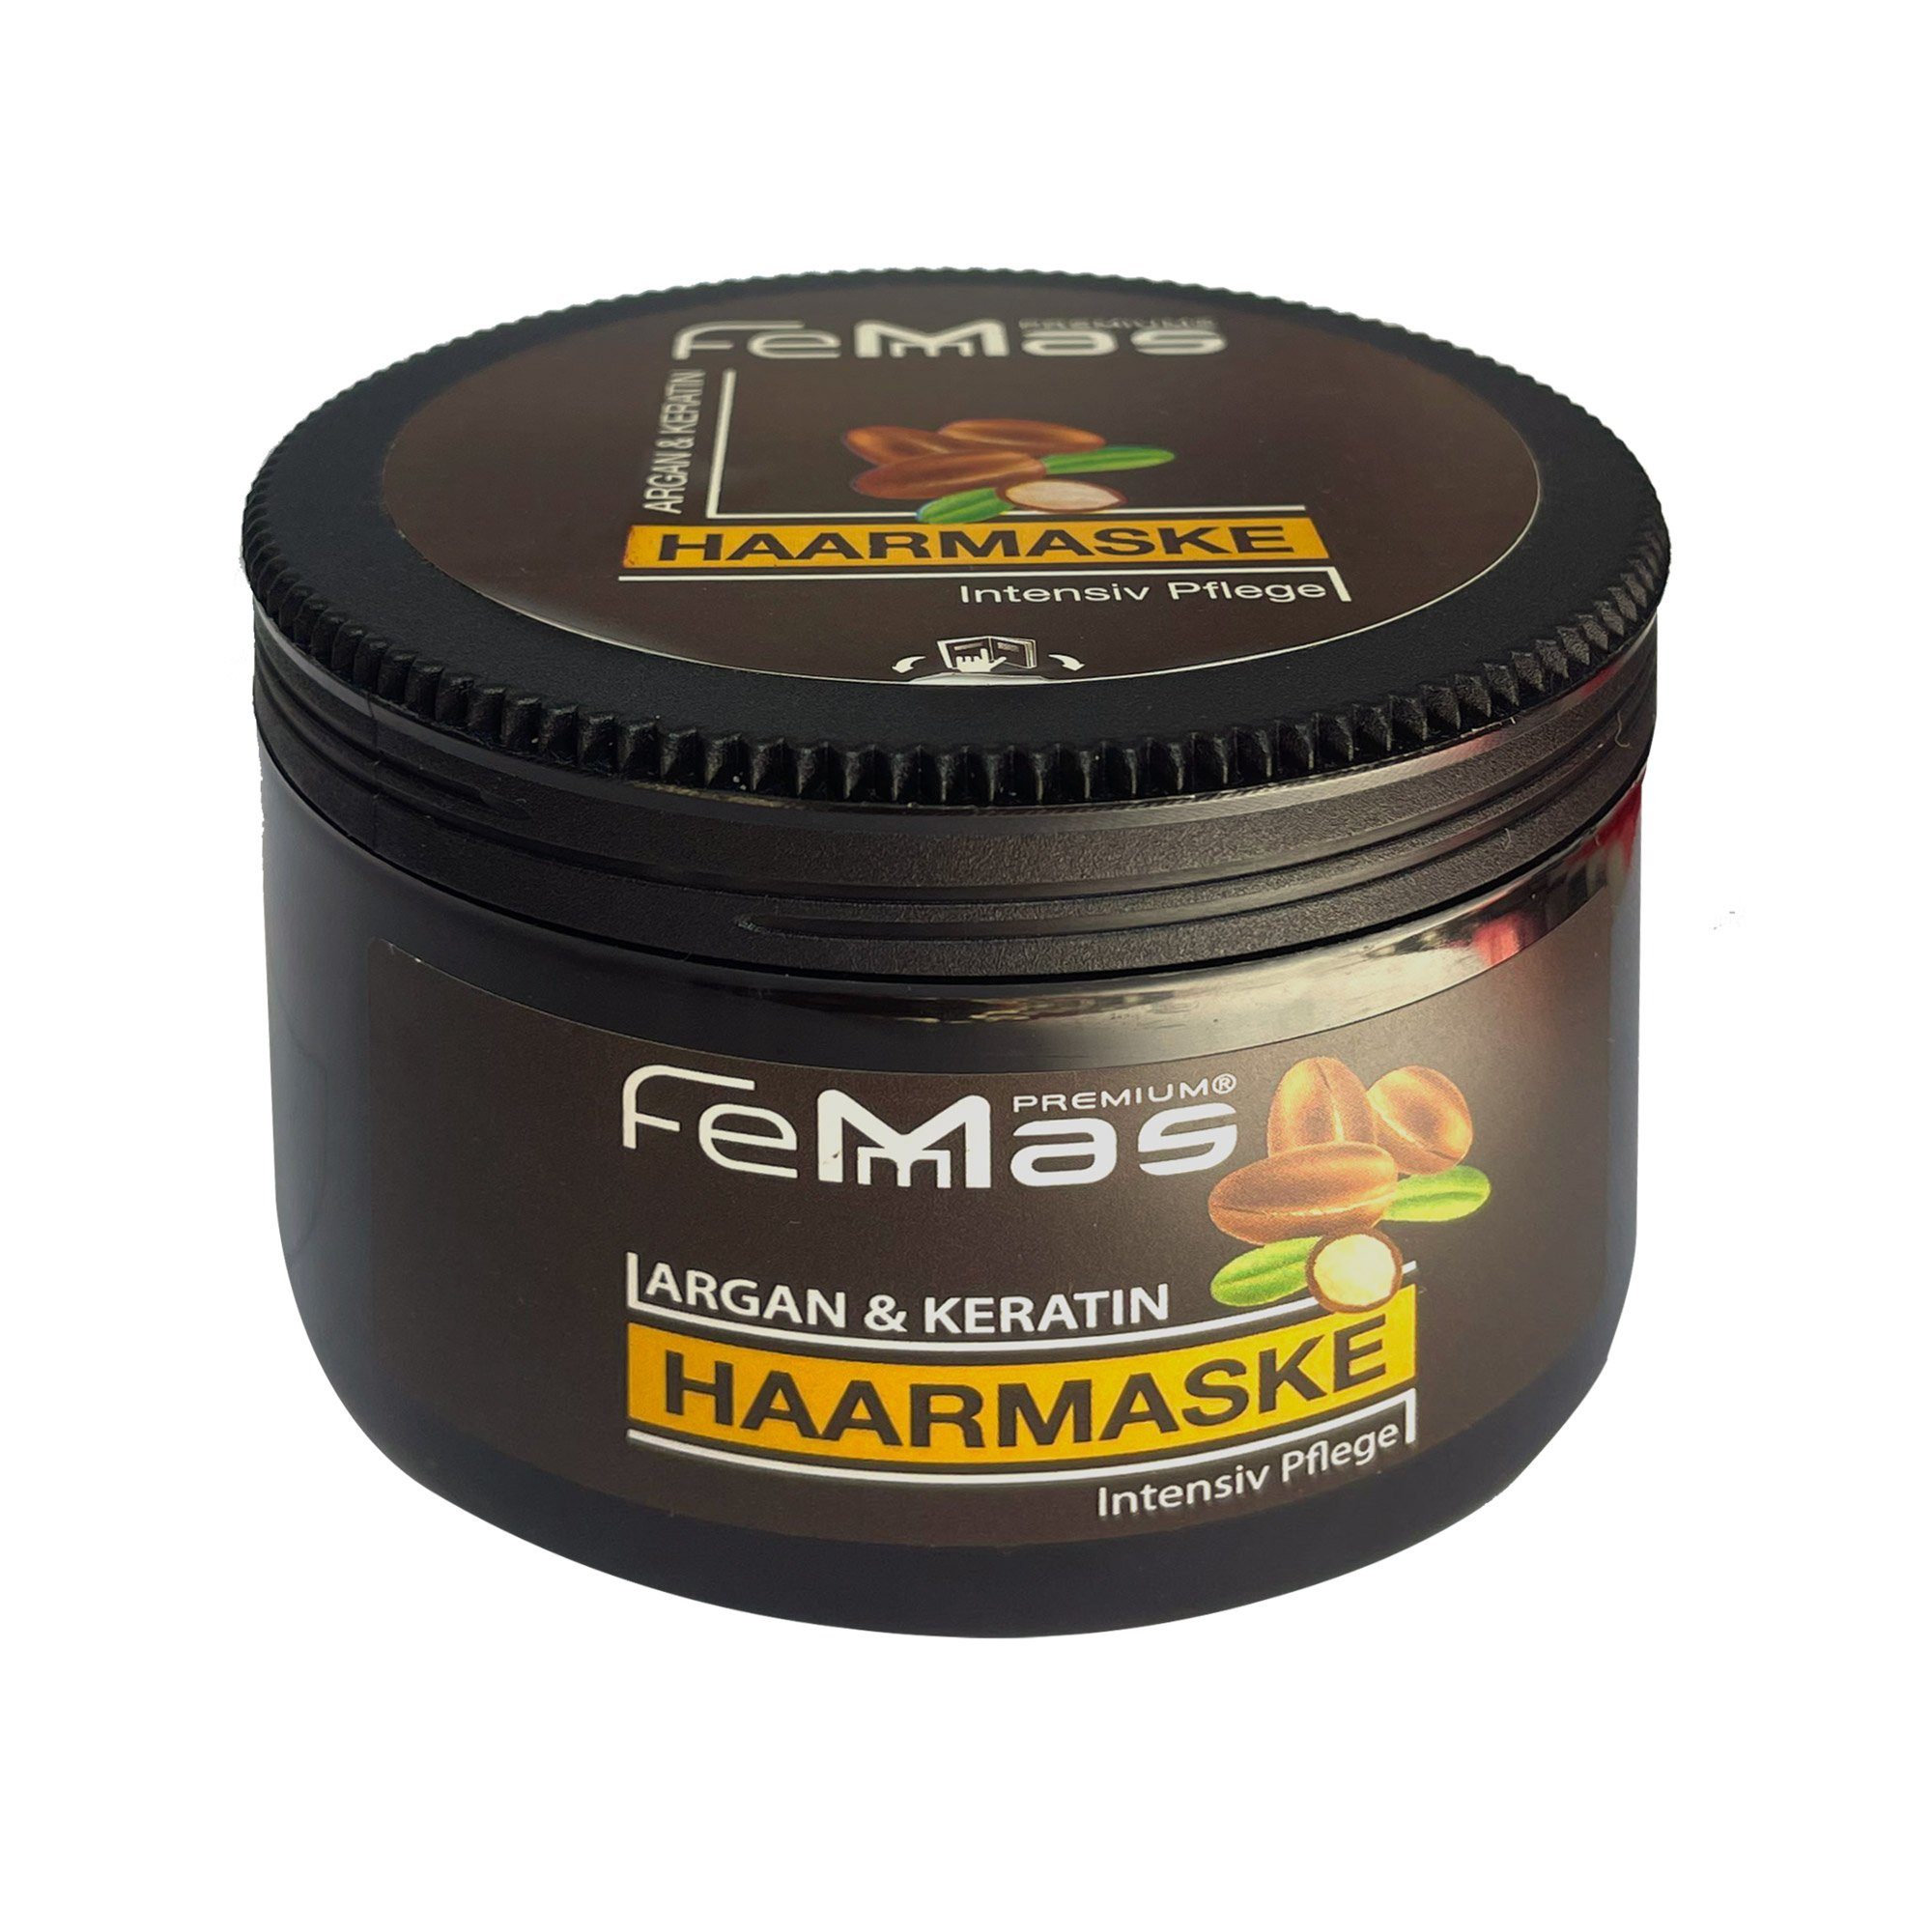 Femmas Premium Haarmaske Argan Keratin FemMas 300ml & Maske